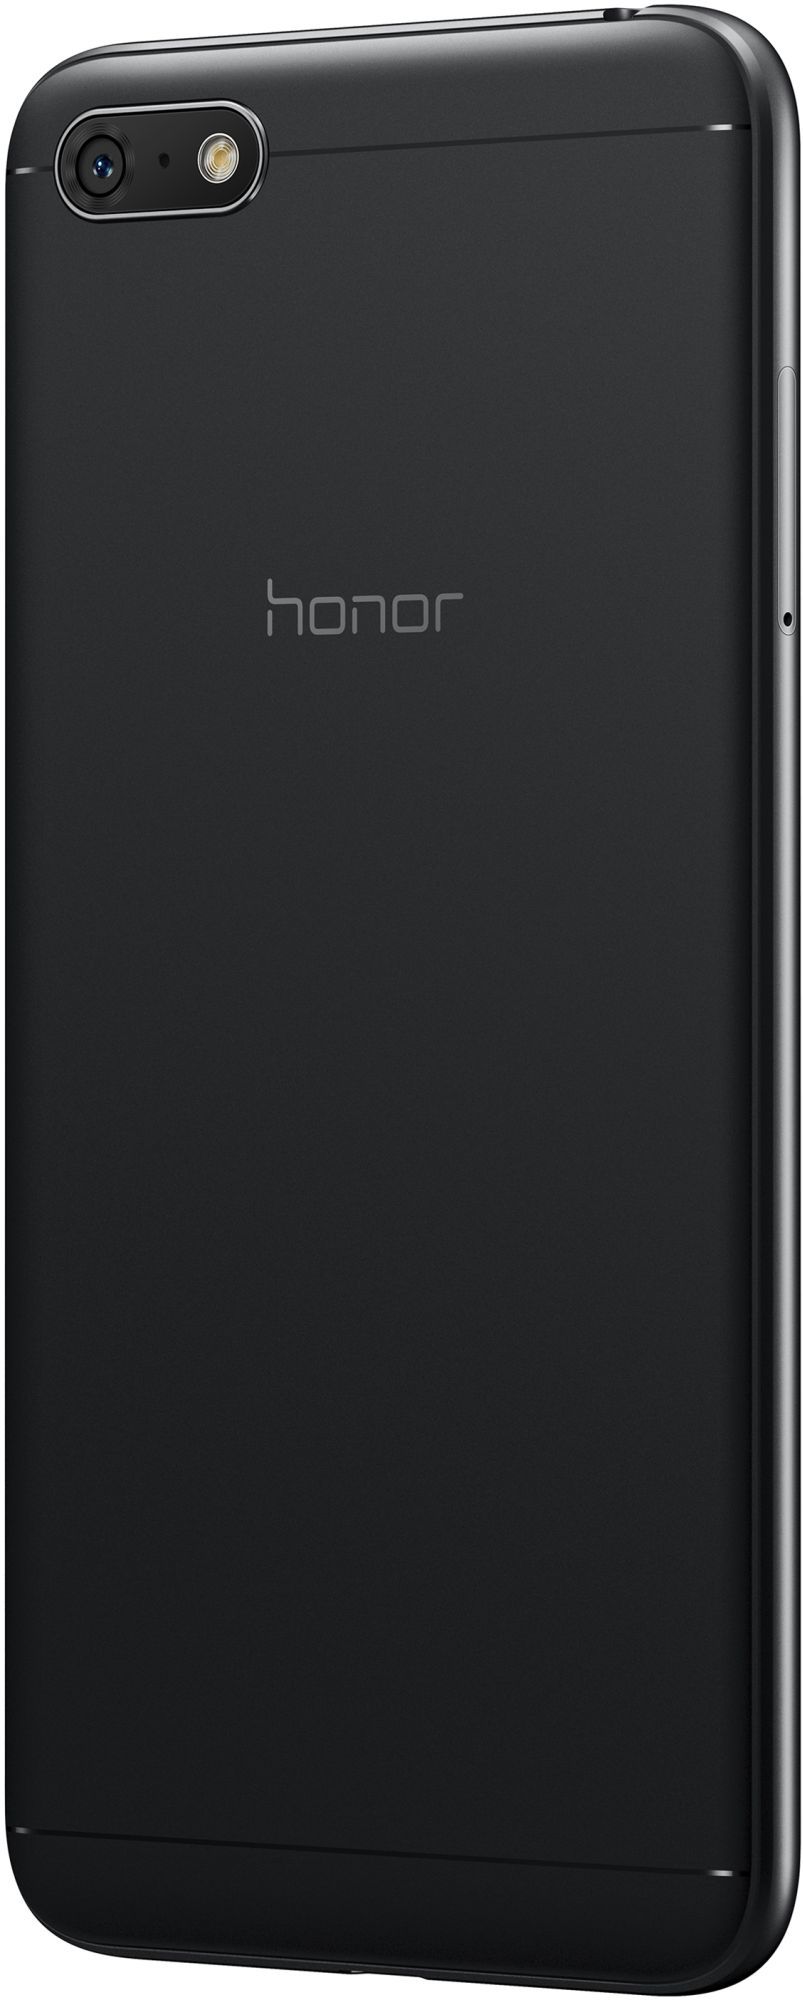 Honor 7a dua. Honor 7a. Honor 7a Prime 2/32 GB. Смартфон Honor 7s. Смартфон Honor 7s 16gb.